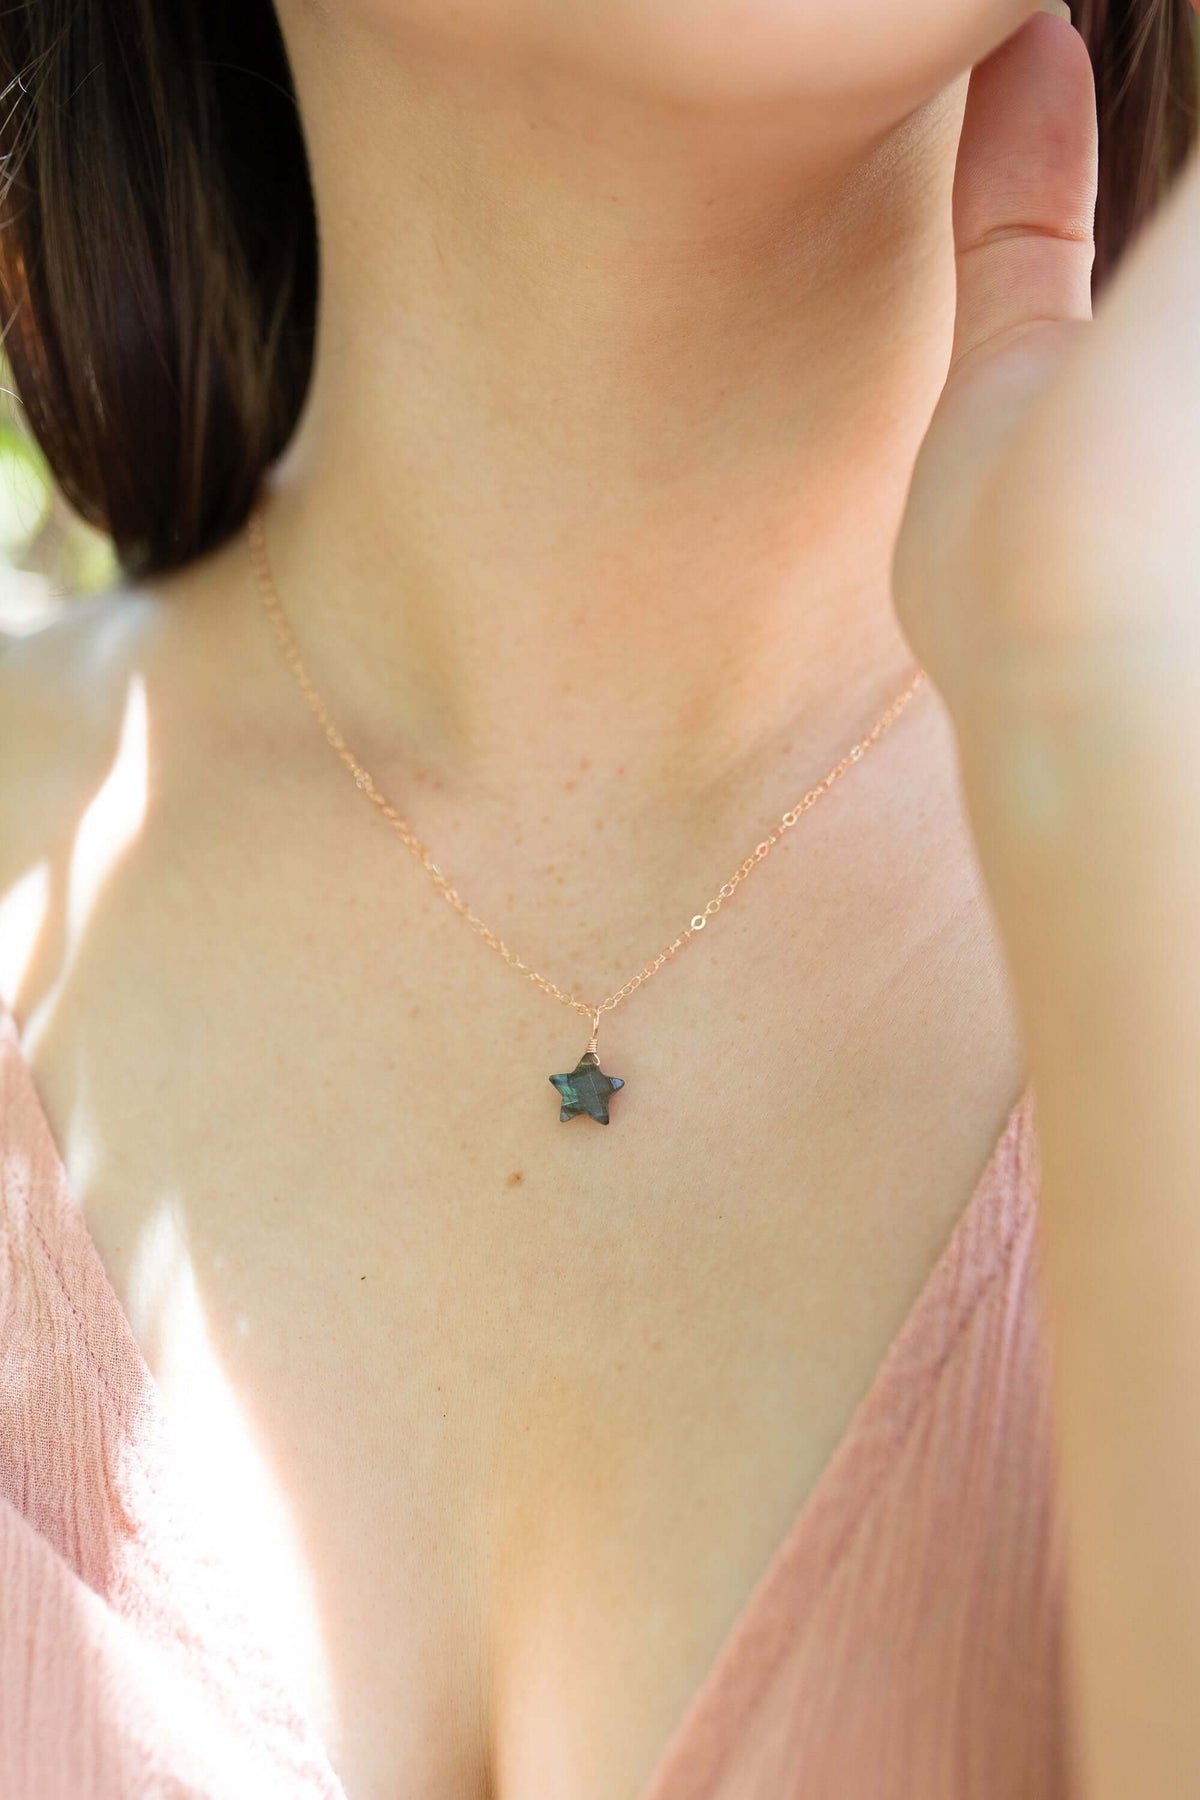 Crystal Star Pendant Necklace - Labradorite - 14K Rose Gold Fill - Luna Tide Handmade Jewellery